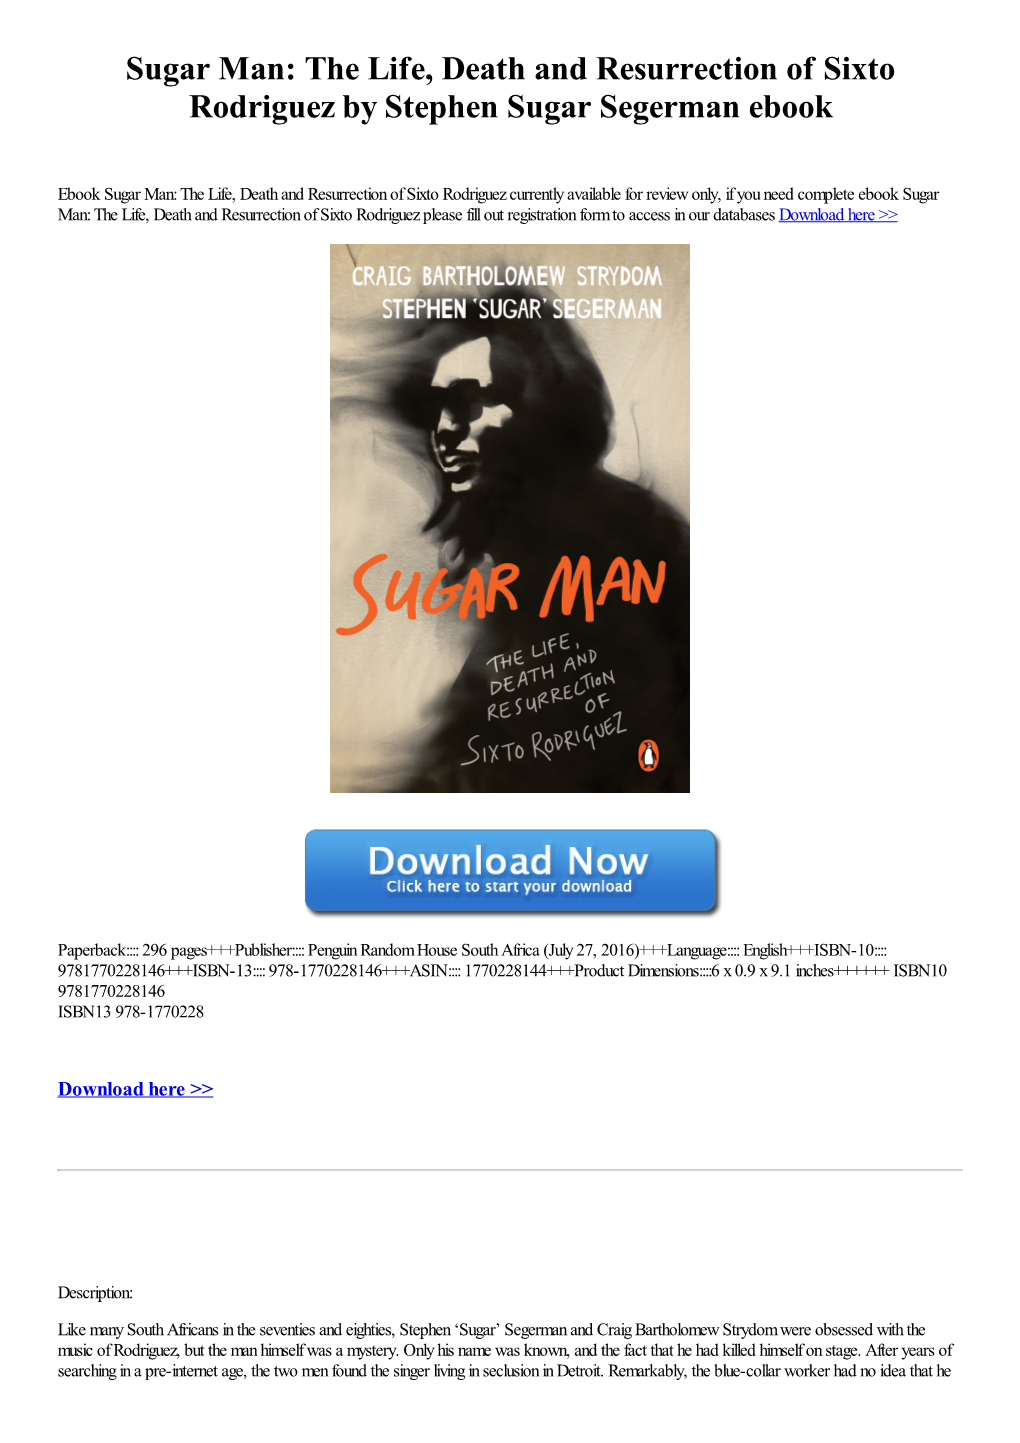 Sugar Man: the Life, Death and Resurrection of Sixto Rodriguez by Stephen Sugar Segerman Ebook